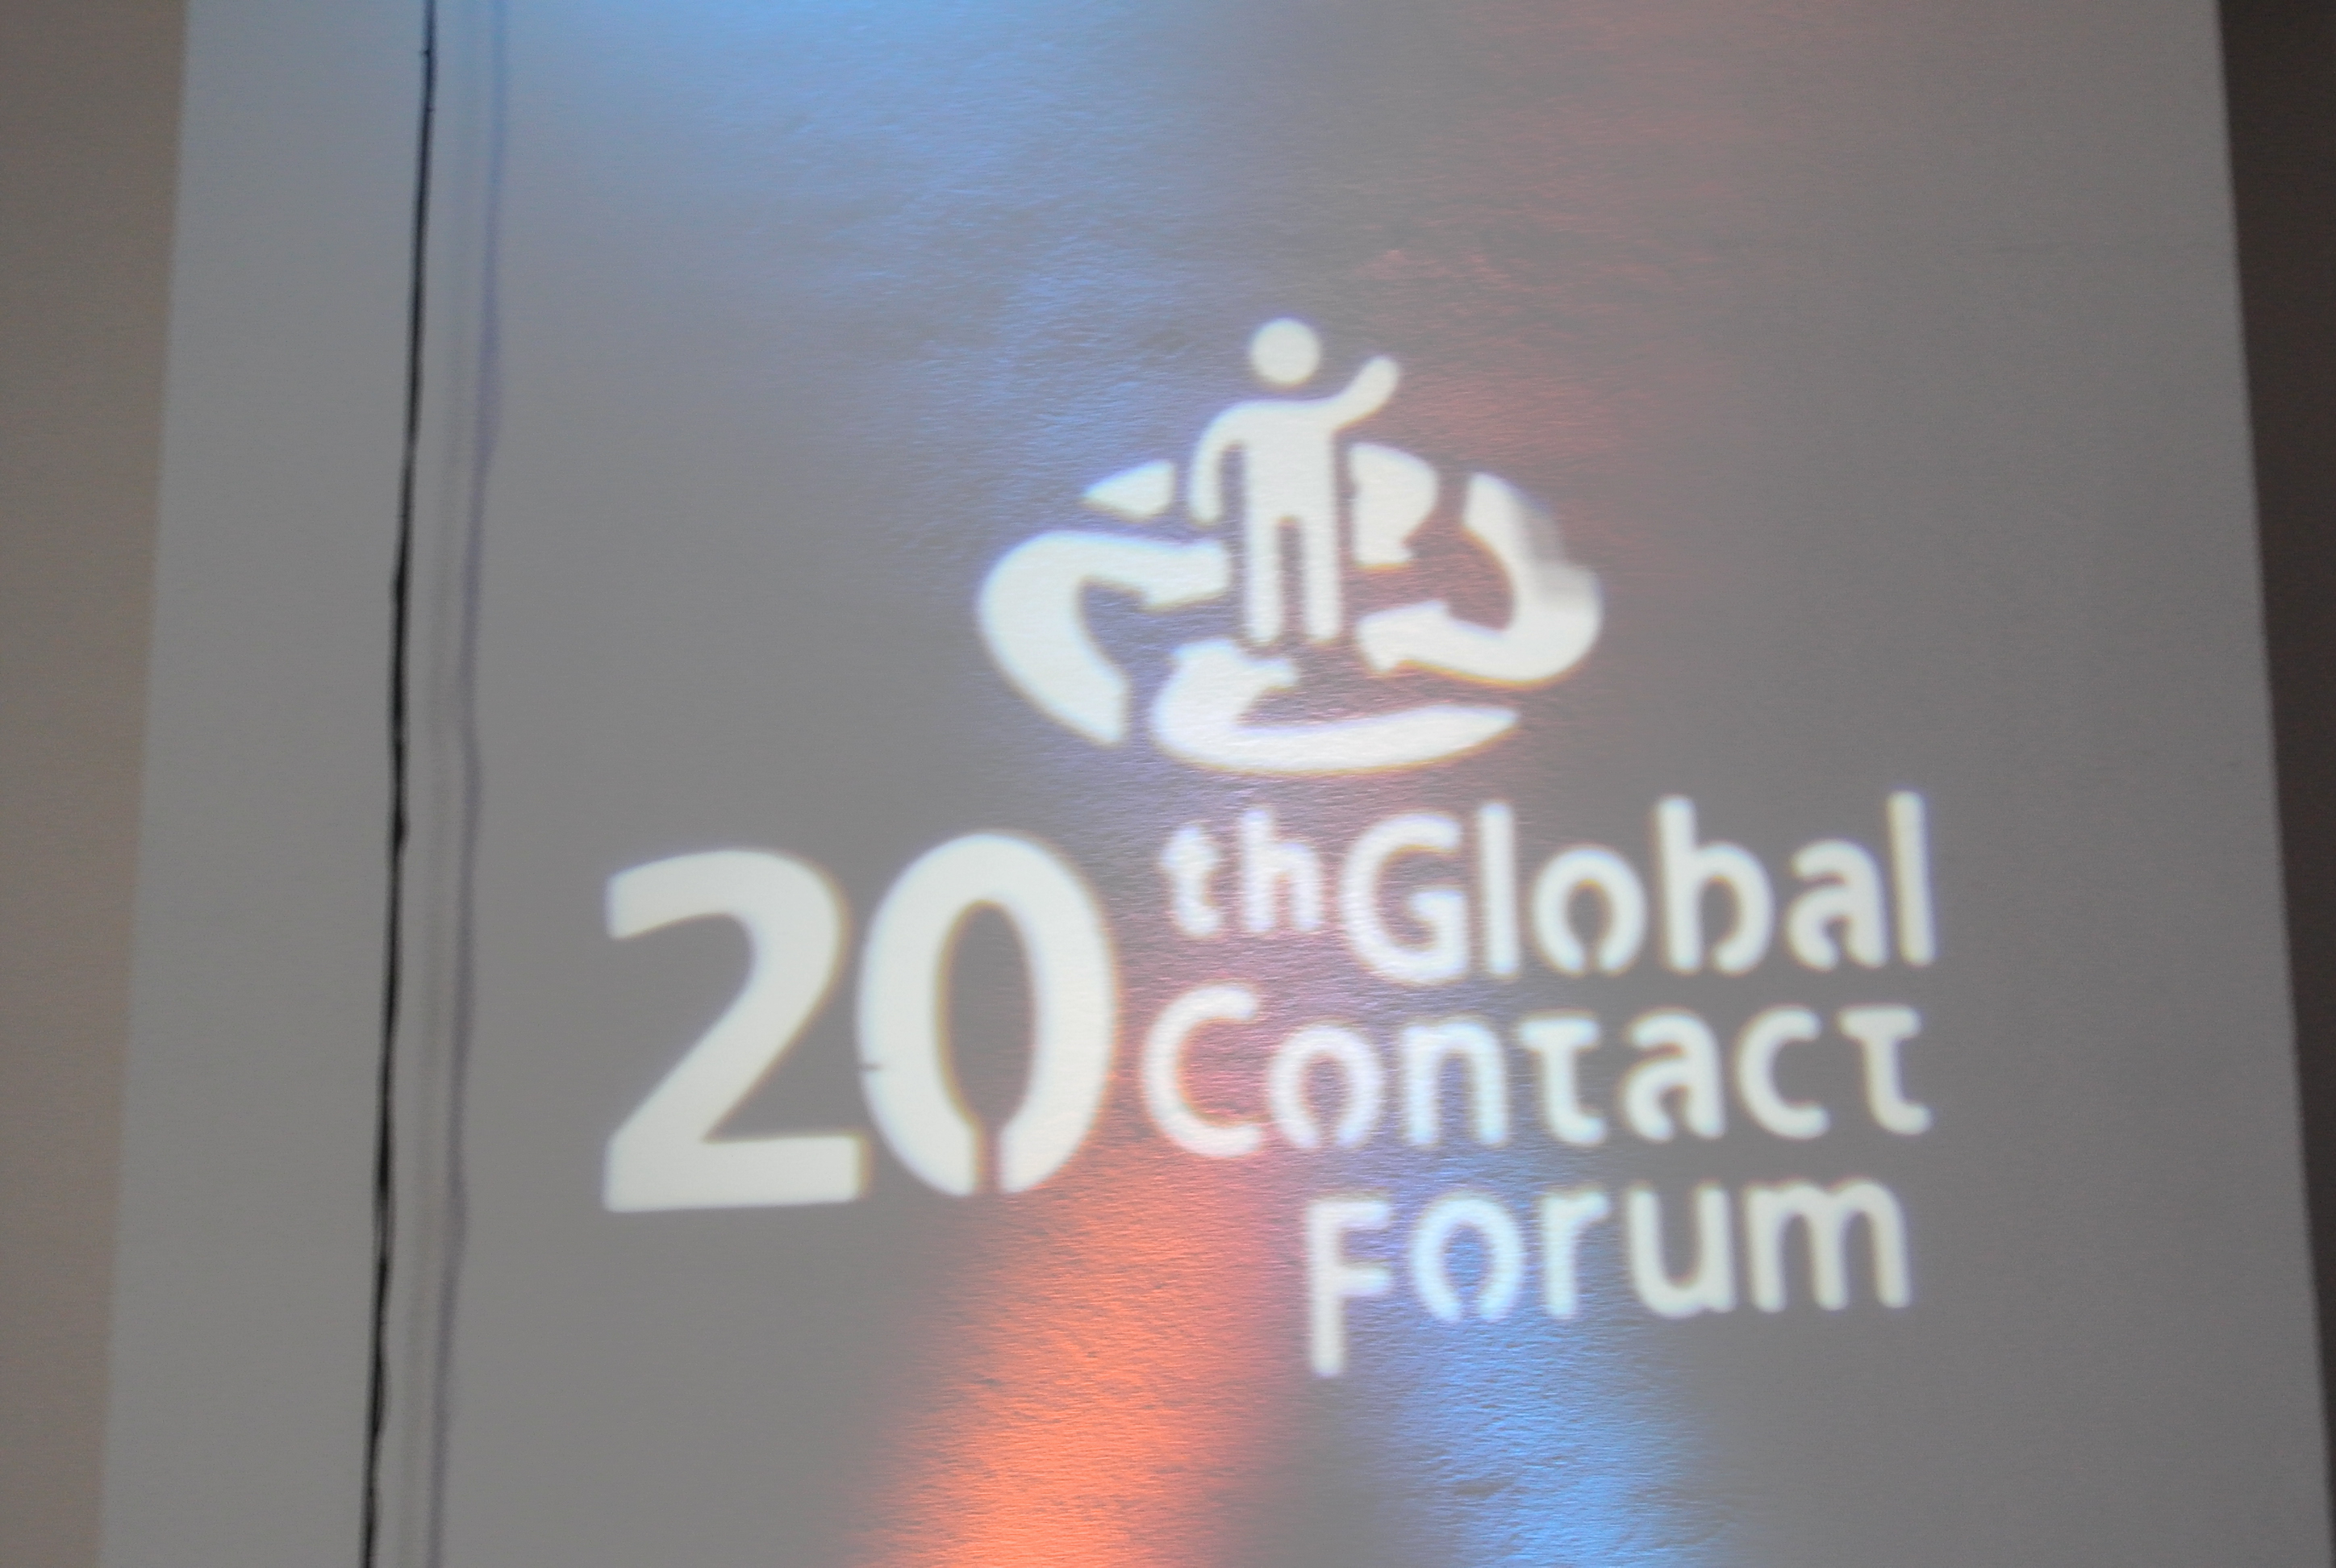 Global contact forum